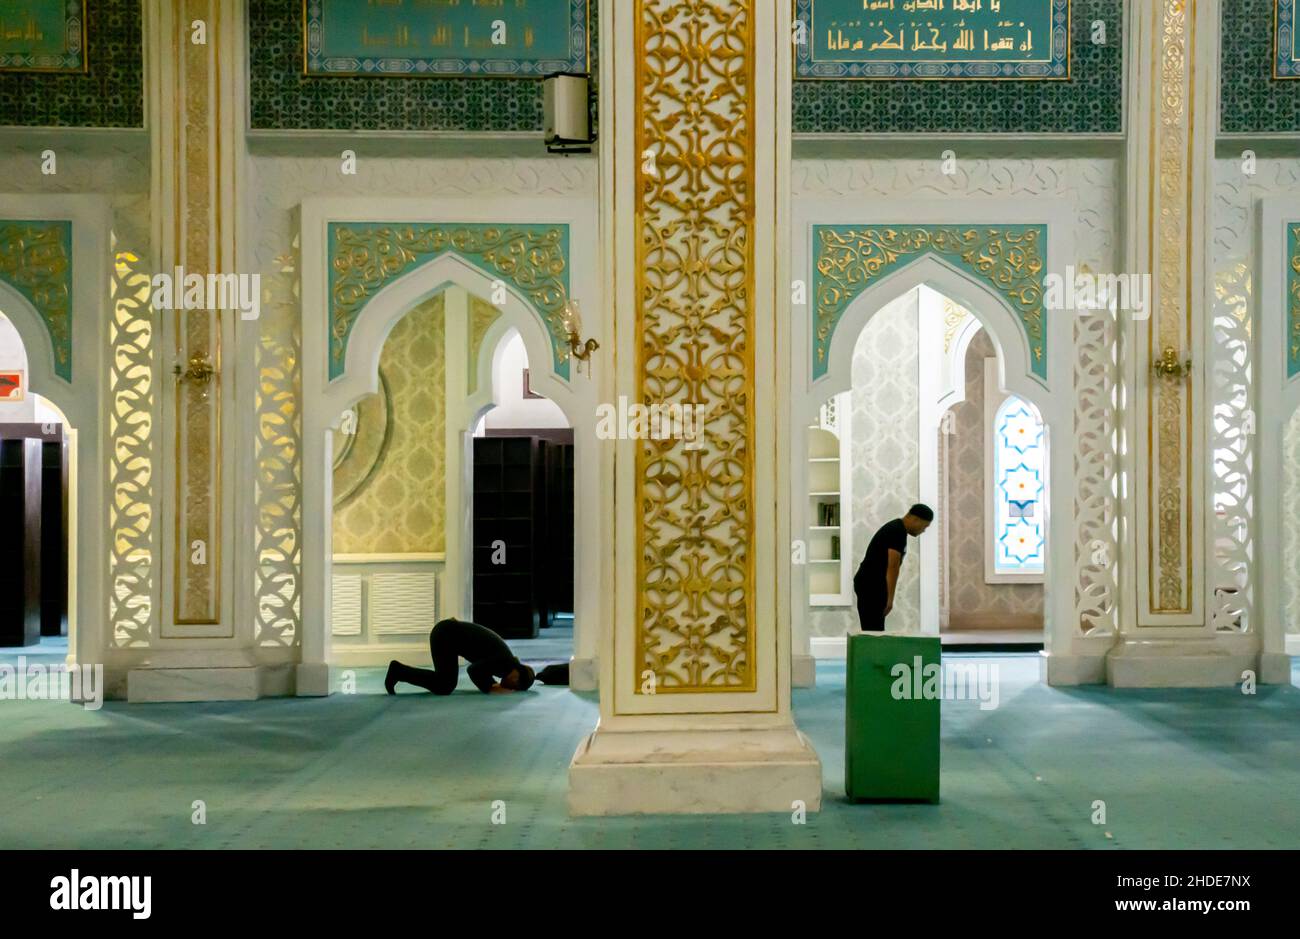 Interior of Khazret- Sultan Mosque, Nur-Sultan, Kazakhstan, Central Asia. Hazret sultan mosque decoration inside. Stock Photo